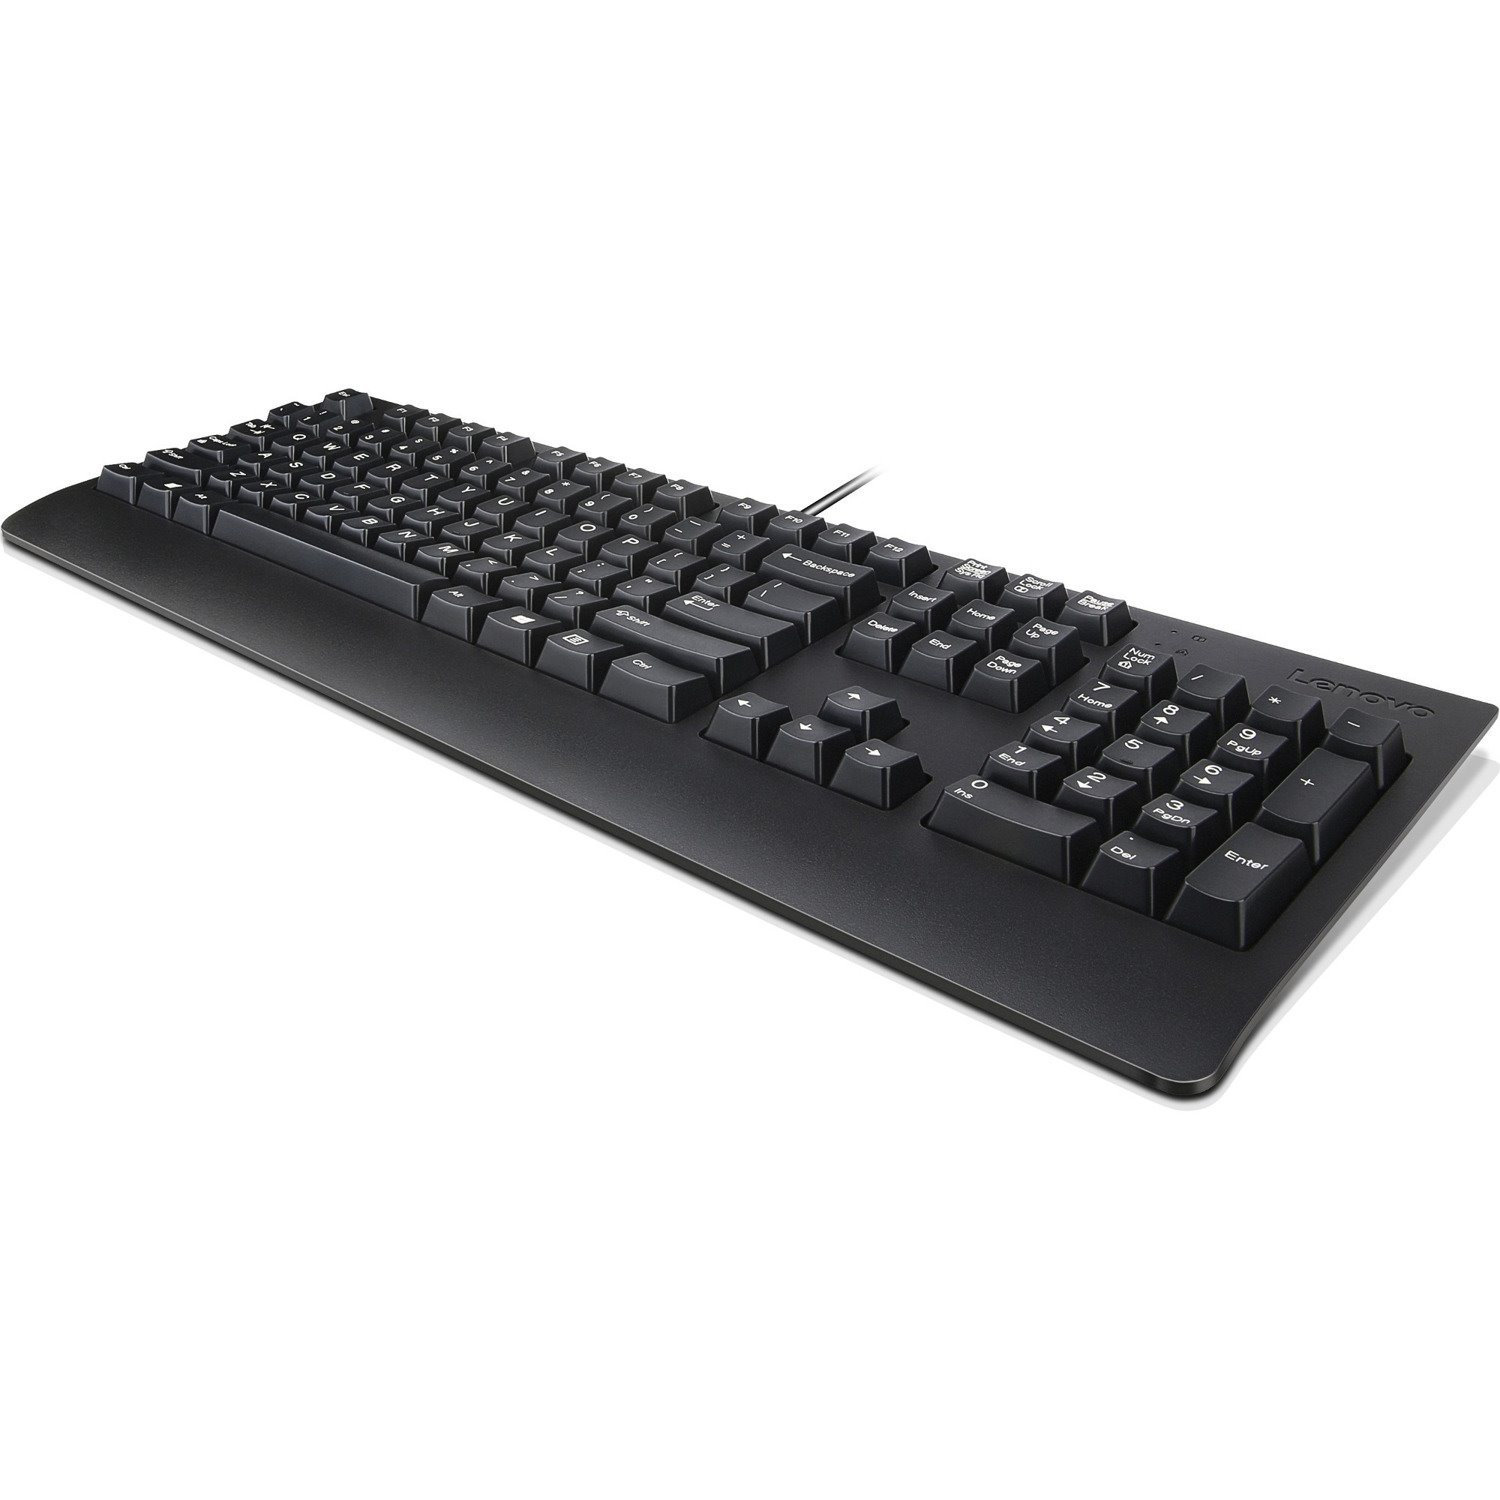 Lenovo Preferred Pro II Keyboard - Cable Connectivity - USB Interface - English (US) - Black